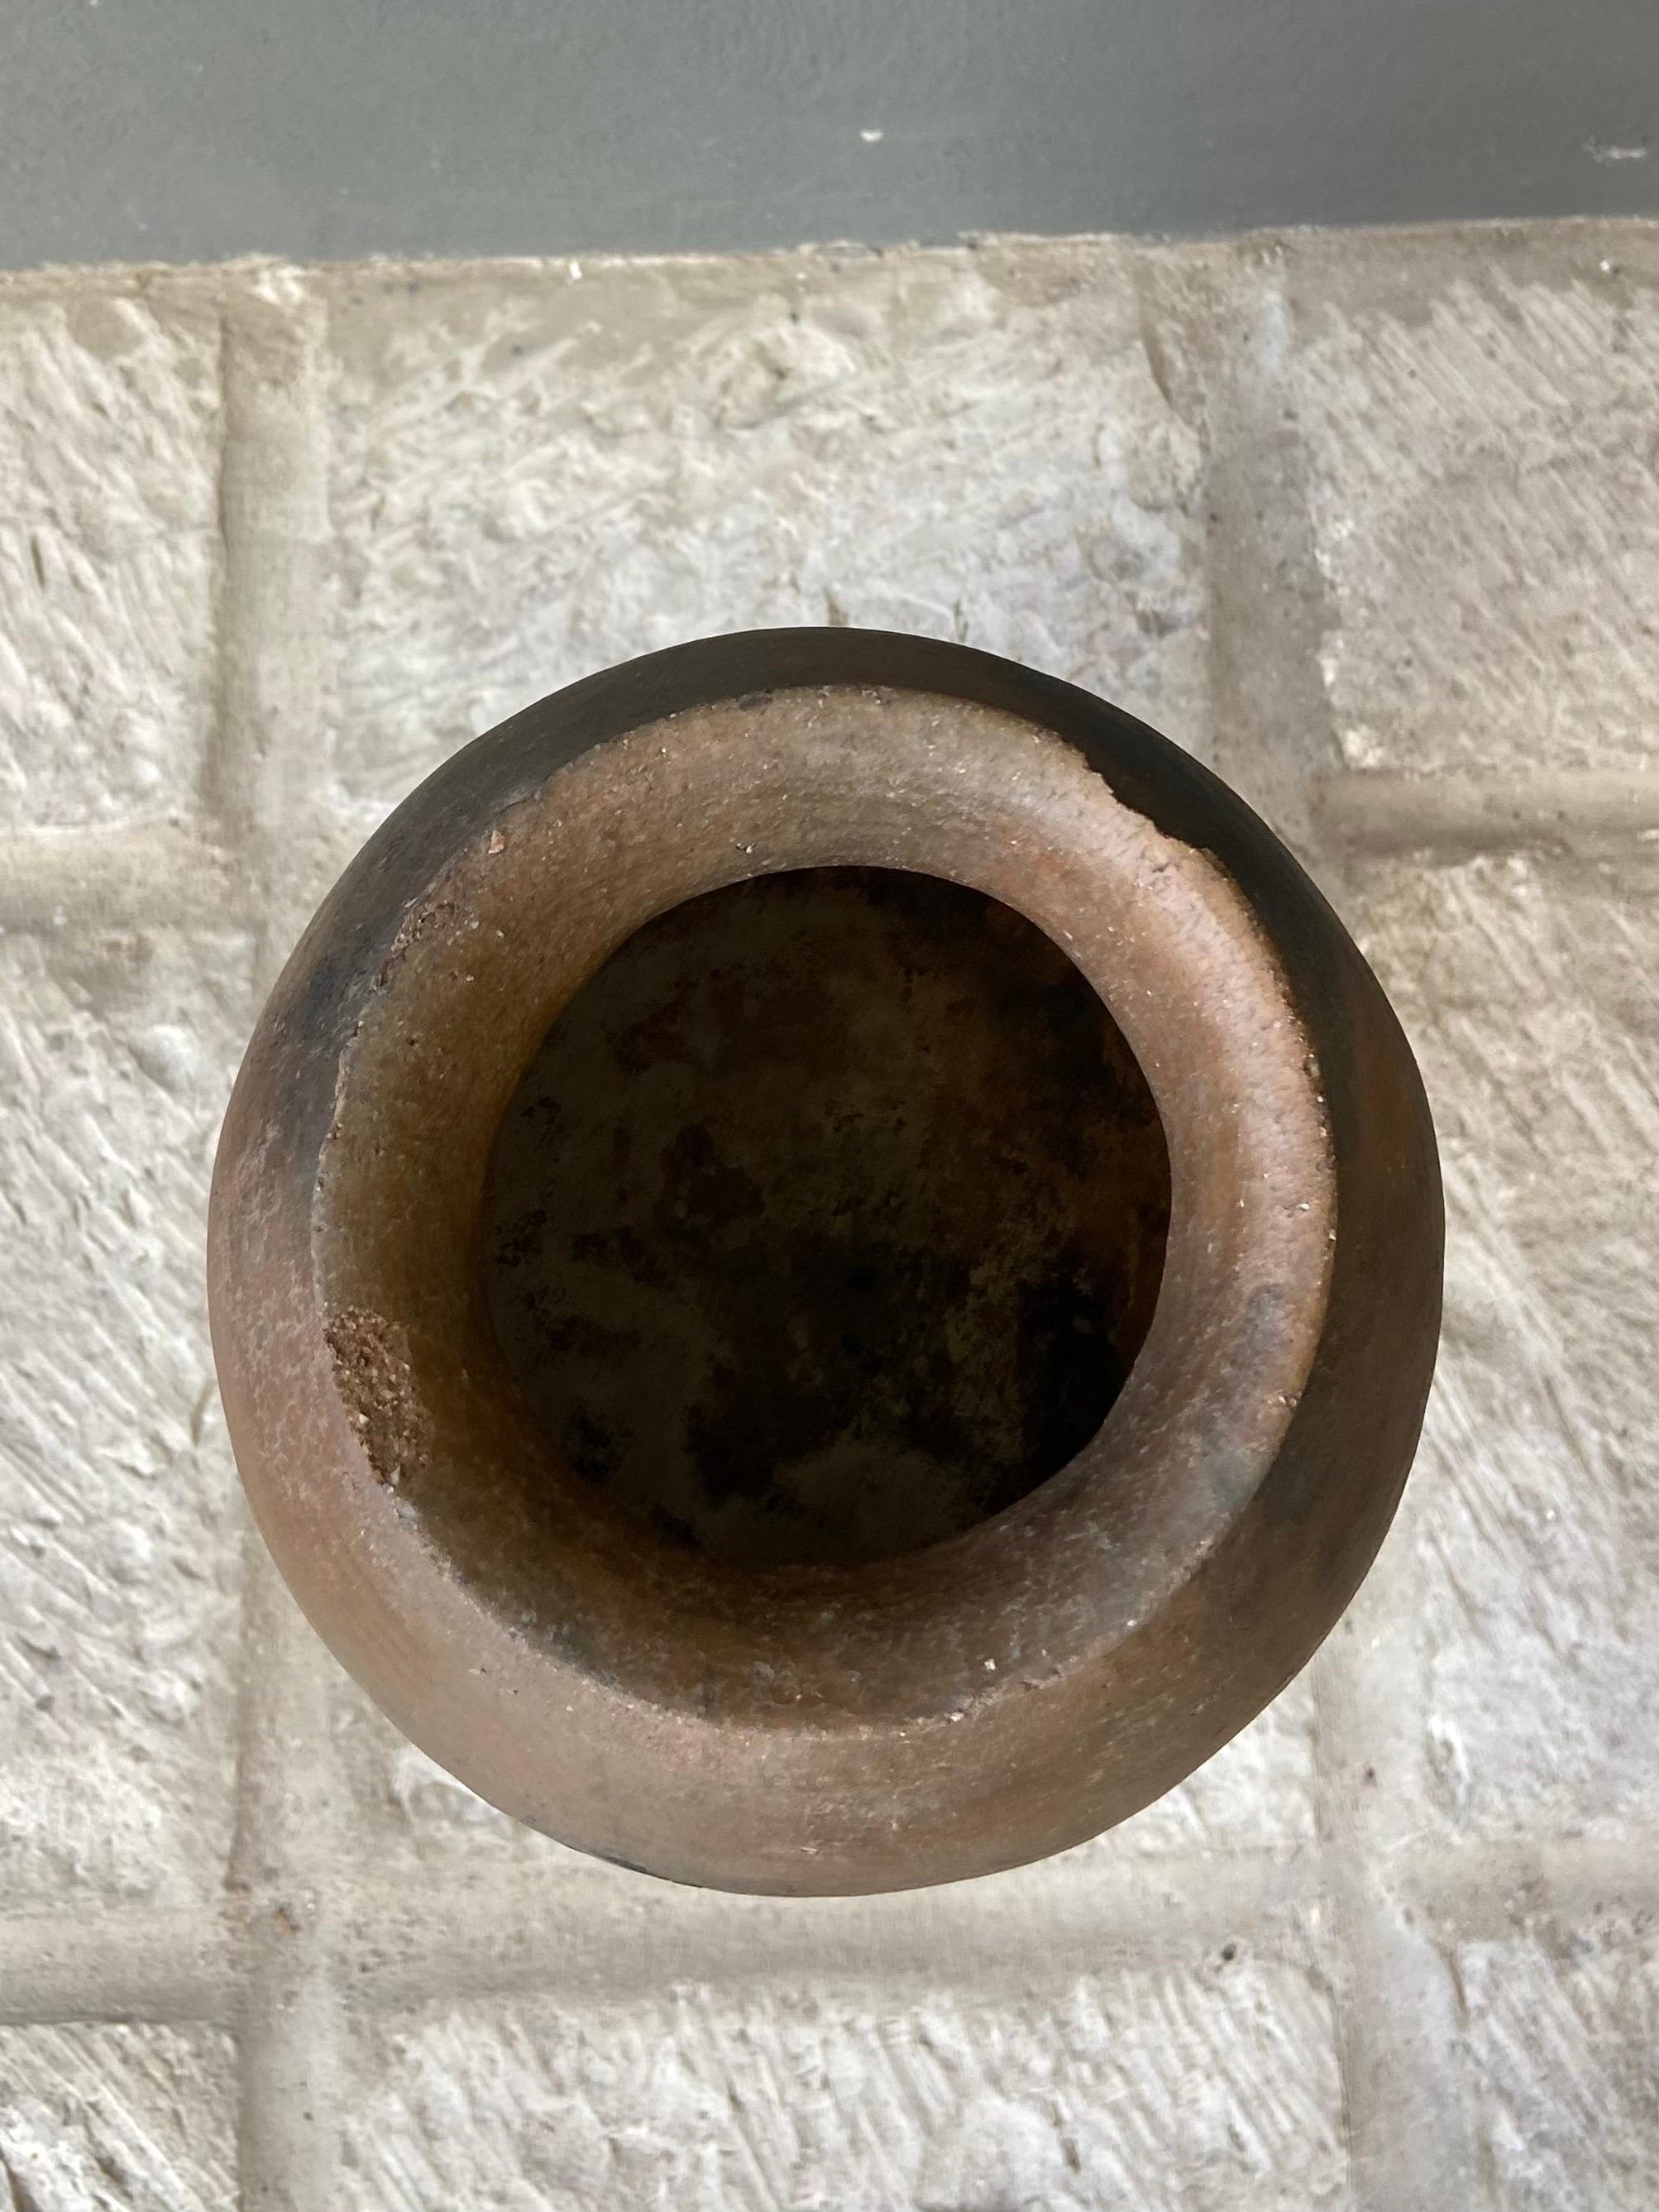 Terracotta Cooking Pot From The Mixteca Region of Oaxaca, Mexico 1